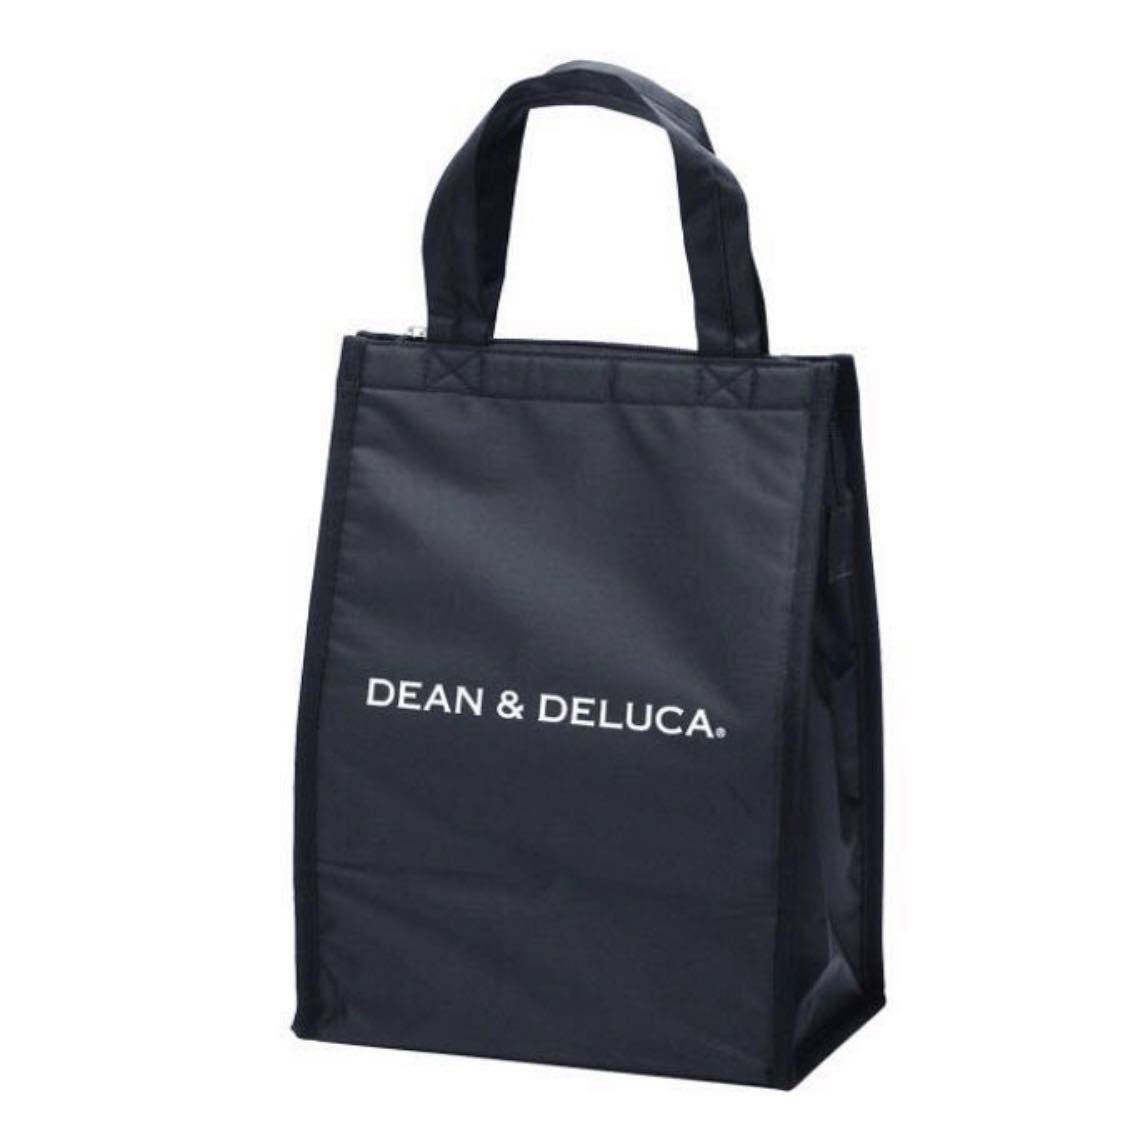 Mサイズ 黒 ブラック DEAN&DELUCA ディーン&デルーカ 保冷バッグ クーラーバッグ エコバッグ ランチバッグトートバッグ ショッピングバッグ